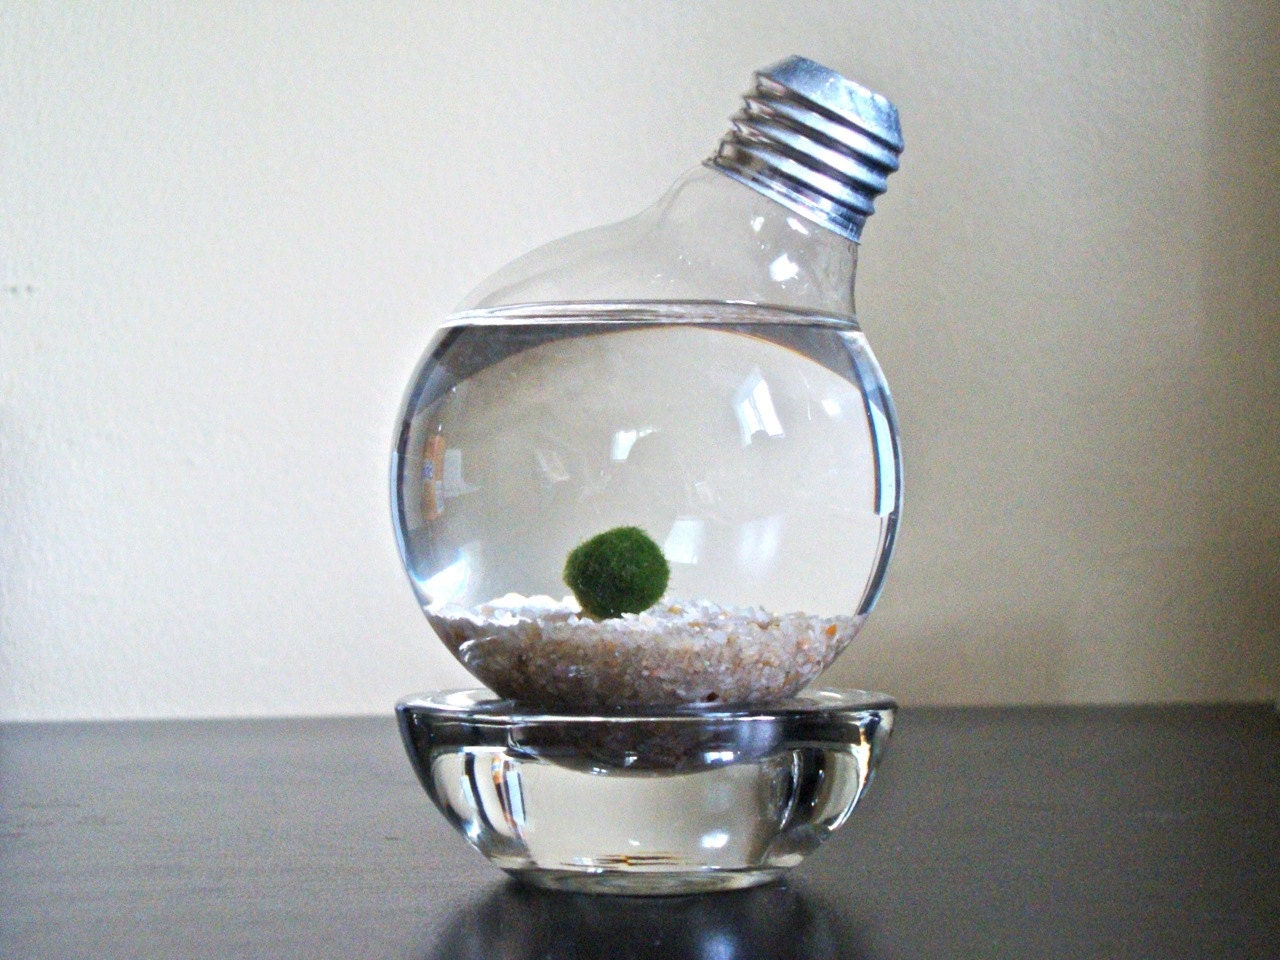 Marimo Moss Ball in a Repurposed Light Bulb (Lightbulb Aquarium)